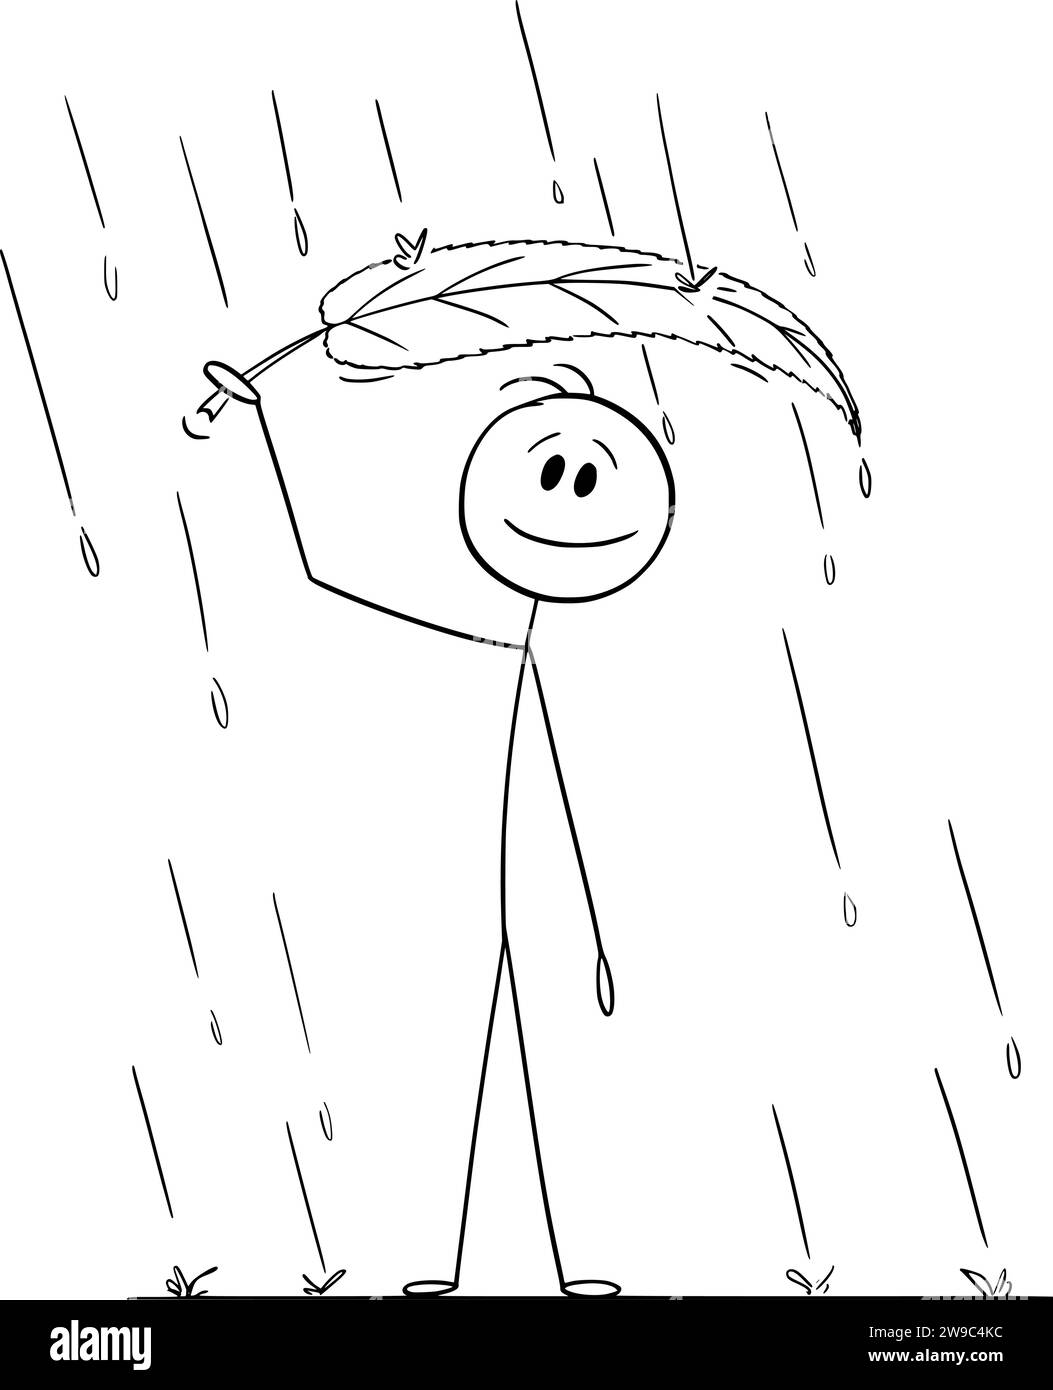 Person Covering Under Leaf as Umbrella, Vector Cartoon Stick Figure Illustration Stock Vector